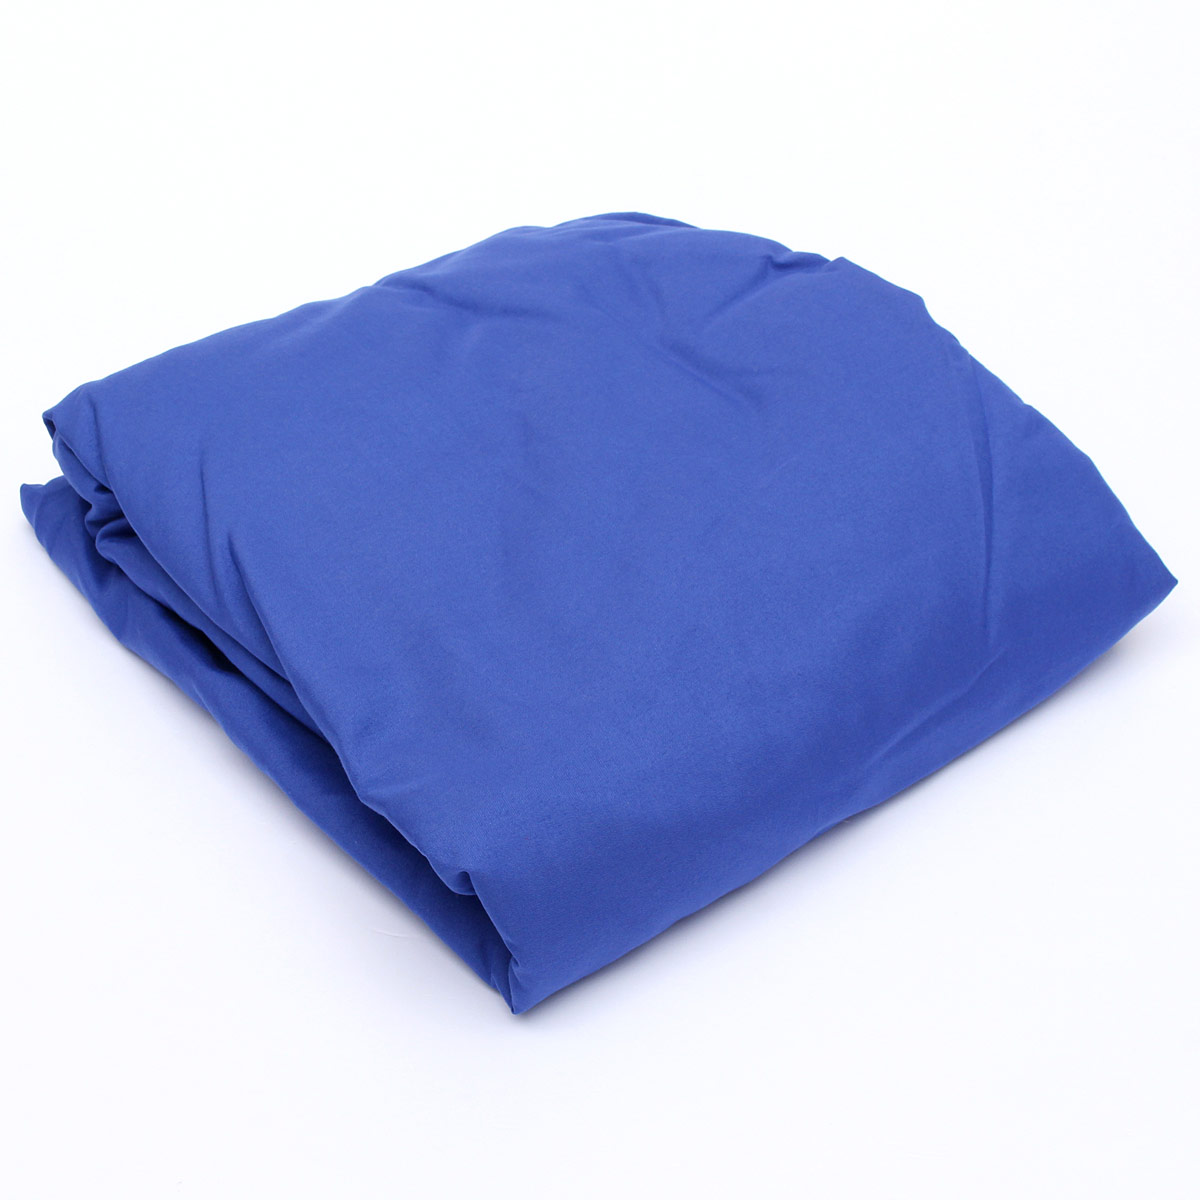 ... Cotton Solid Color Bed Cover 180x200cm Deep Blue | Lazada Singapore